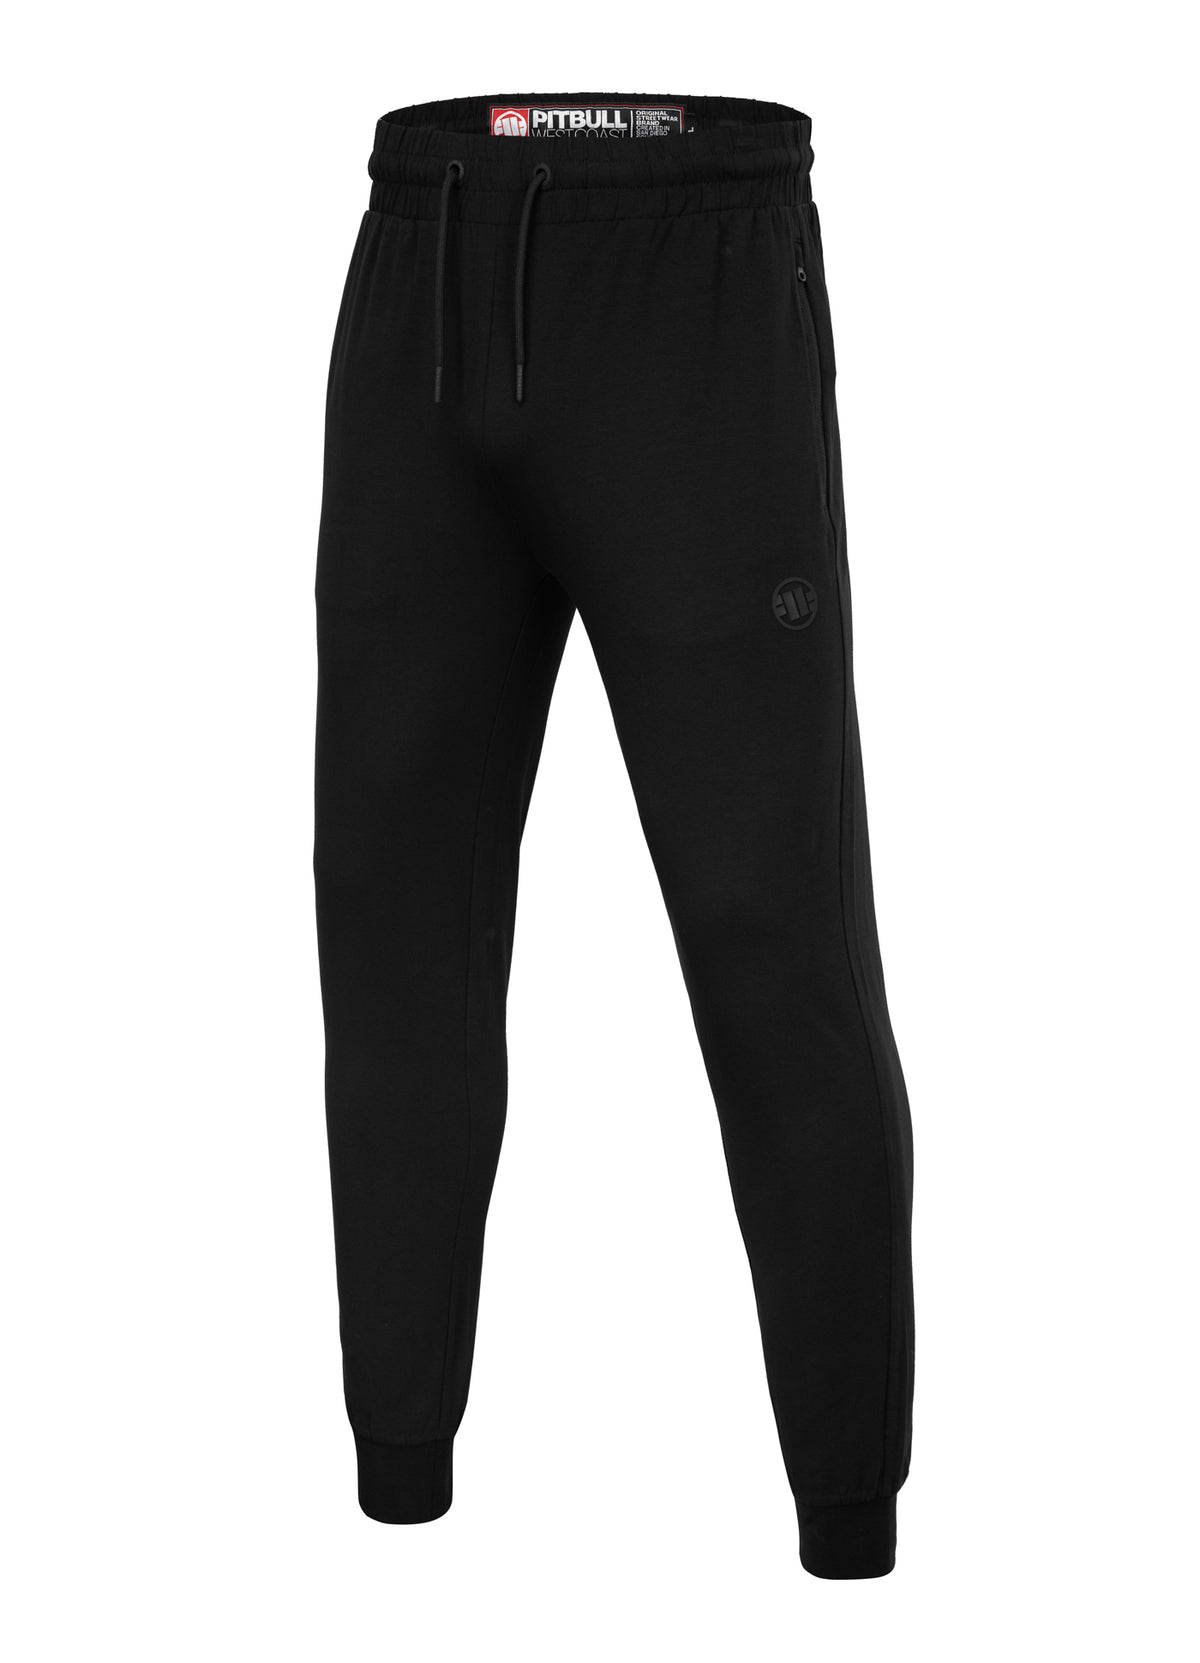 TARENTO 210 Black Jogging Pants - Pitbullstore.eu